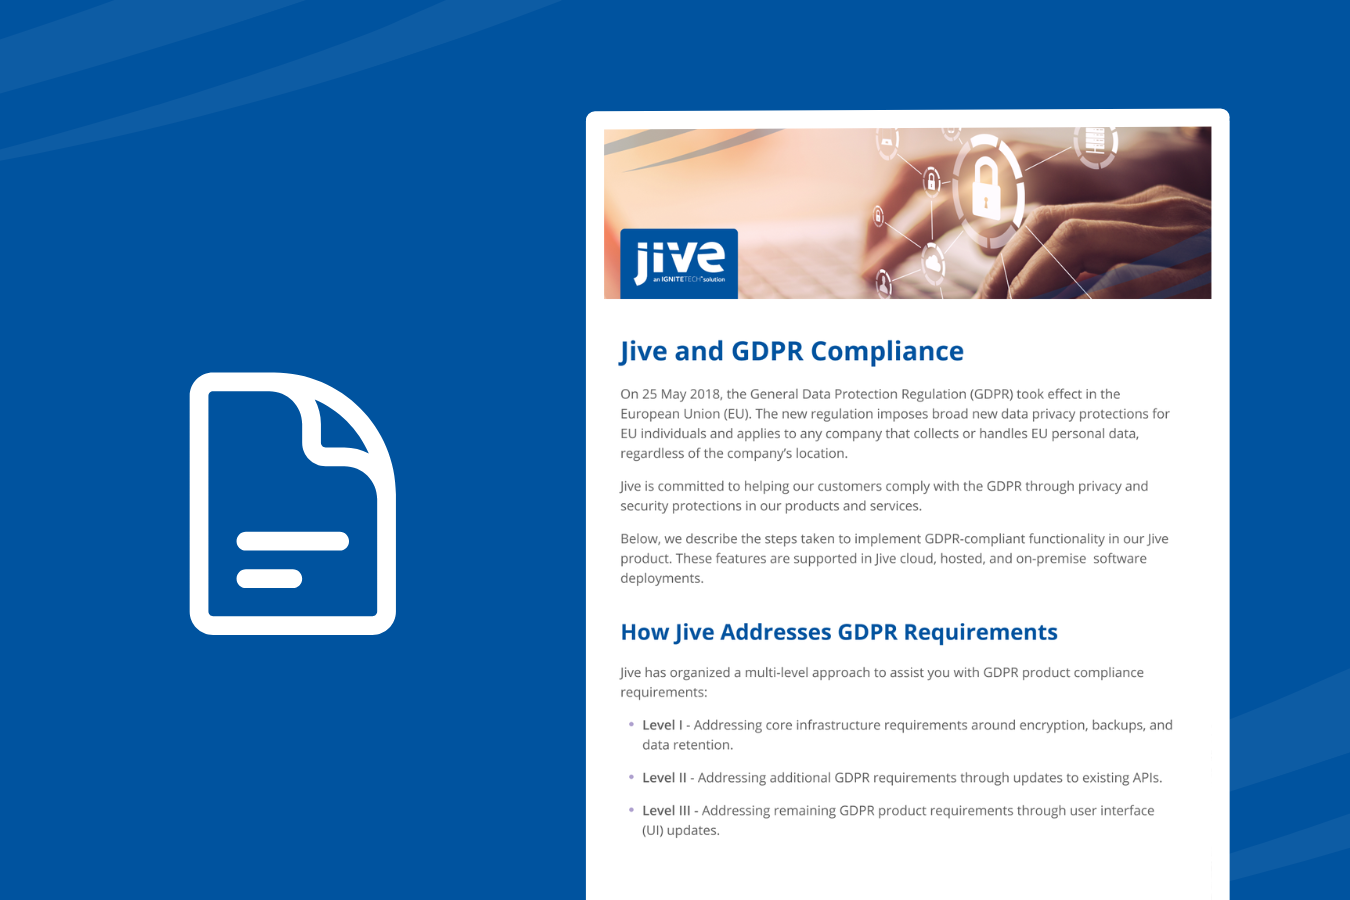 Jive and GDPR Compliance